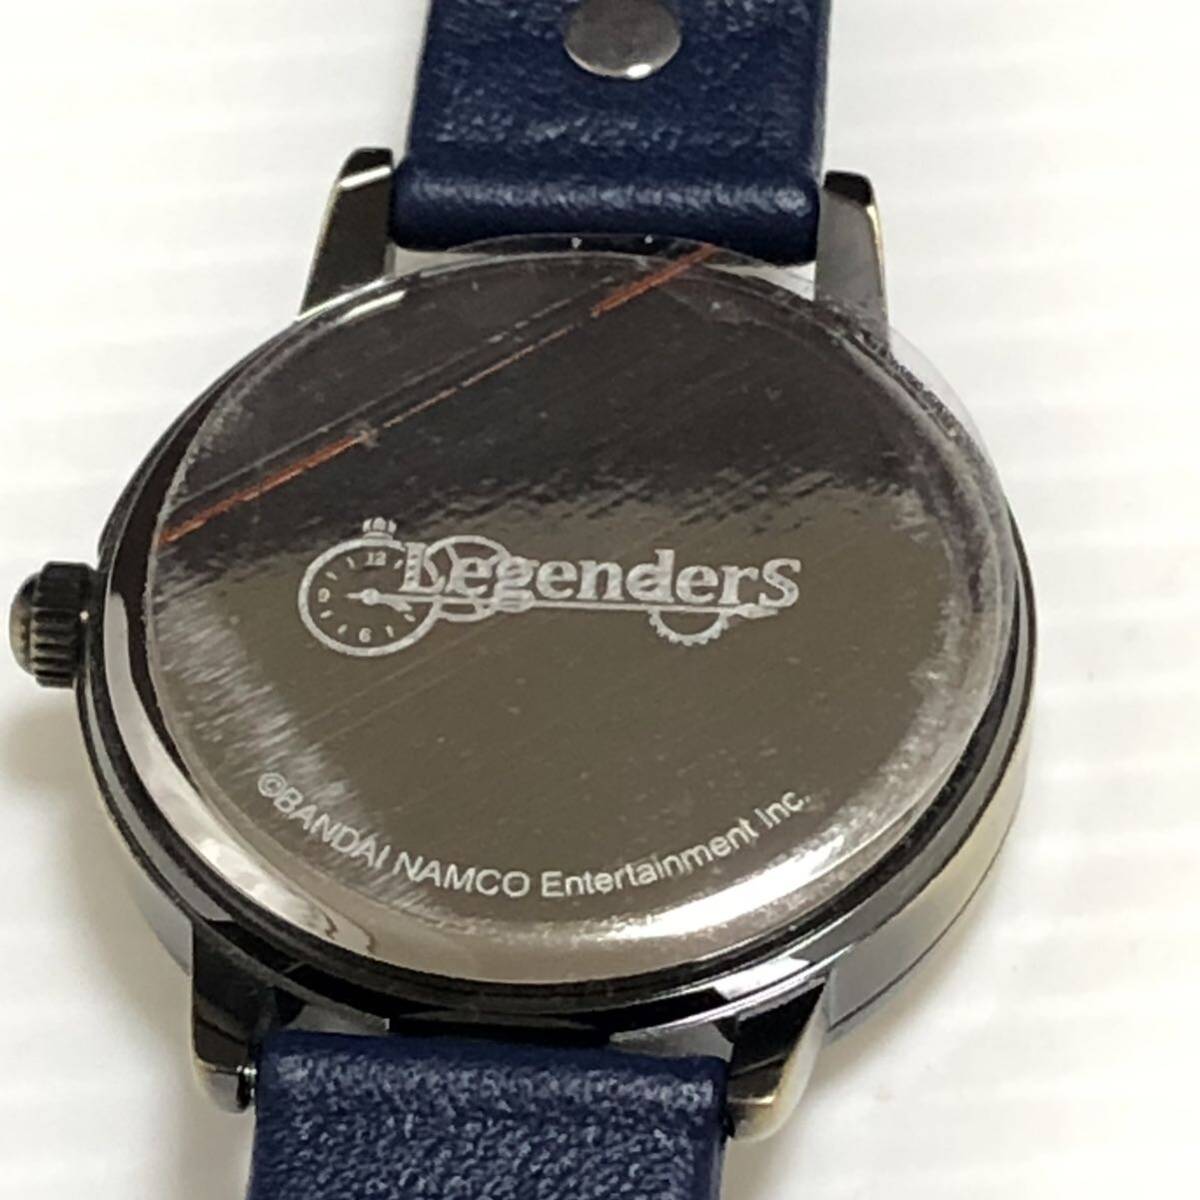 m209-0583-15 Legenders モデル 腕時計 アイドルマスター SideM SuperGroupies 電池切れ 動作未確認の画像10